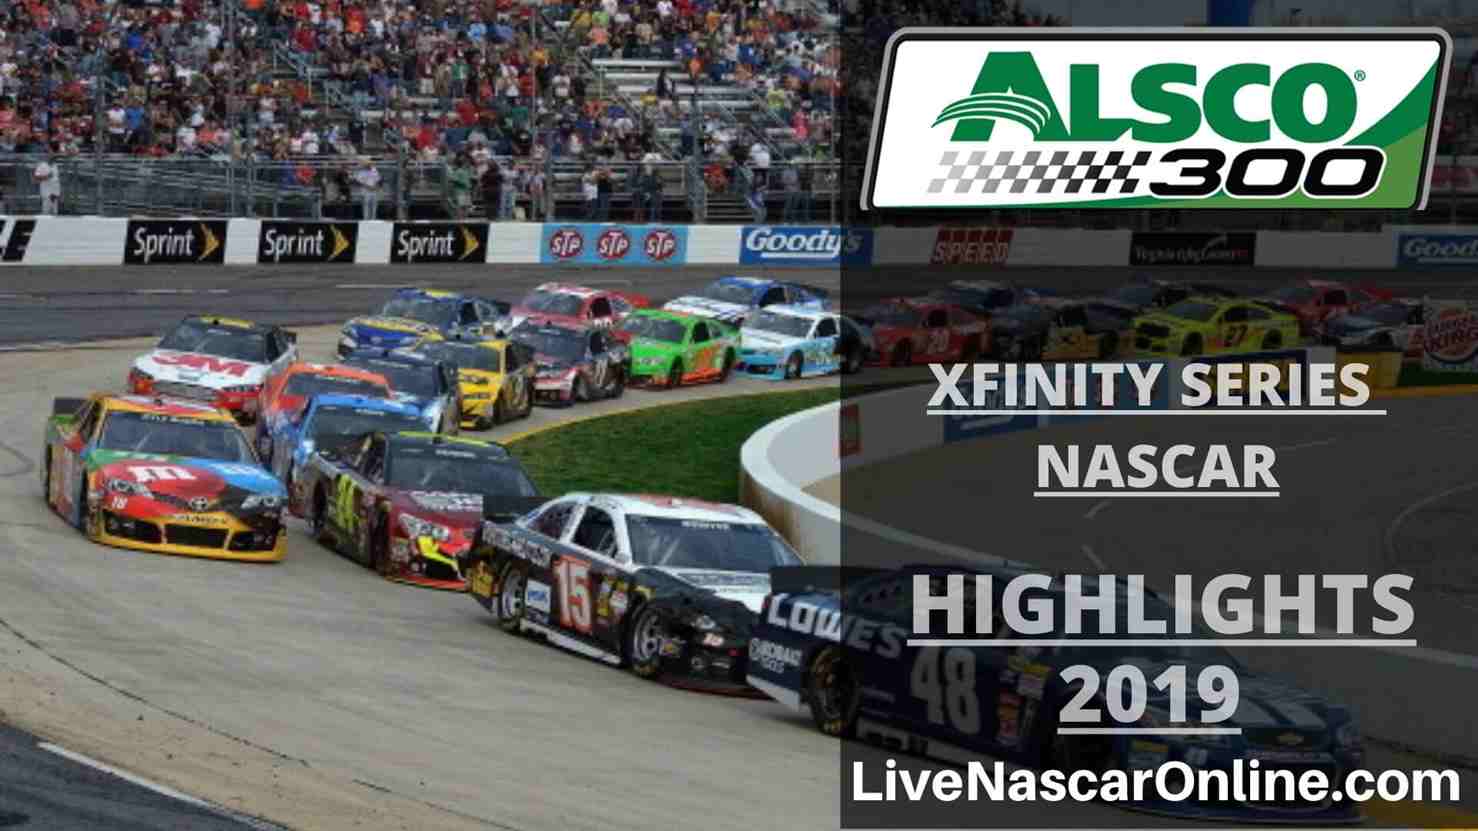  ALSCO 300 NASCAR XFINITY HIGHLIGHTS 2019 ONLINE